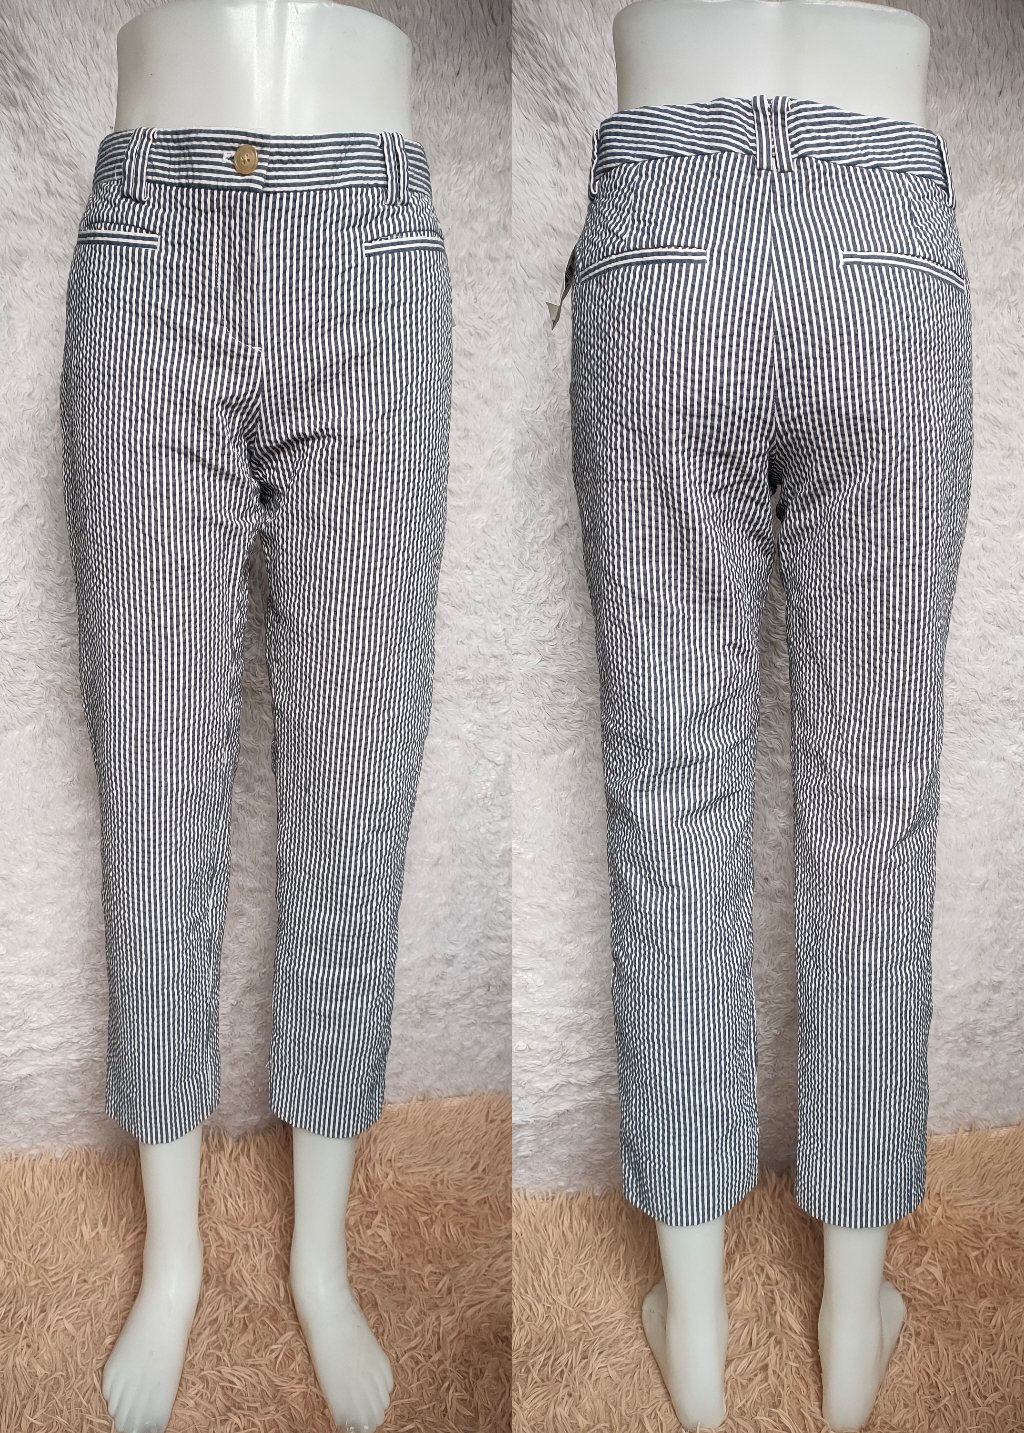 Ladies Skinny Cotton Pants (Ann Taylor Brand) | Lazada Ph